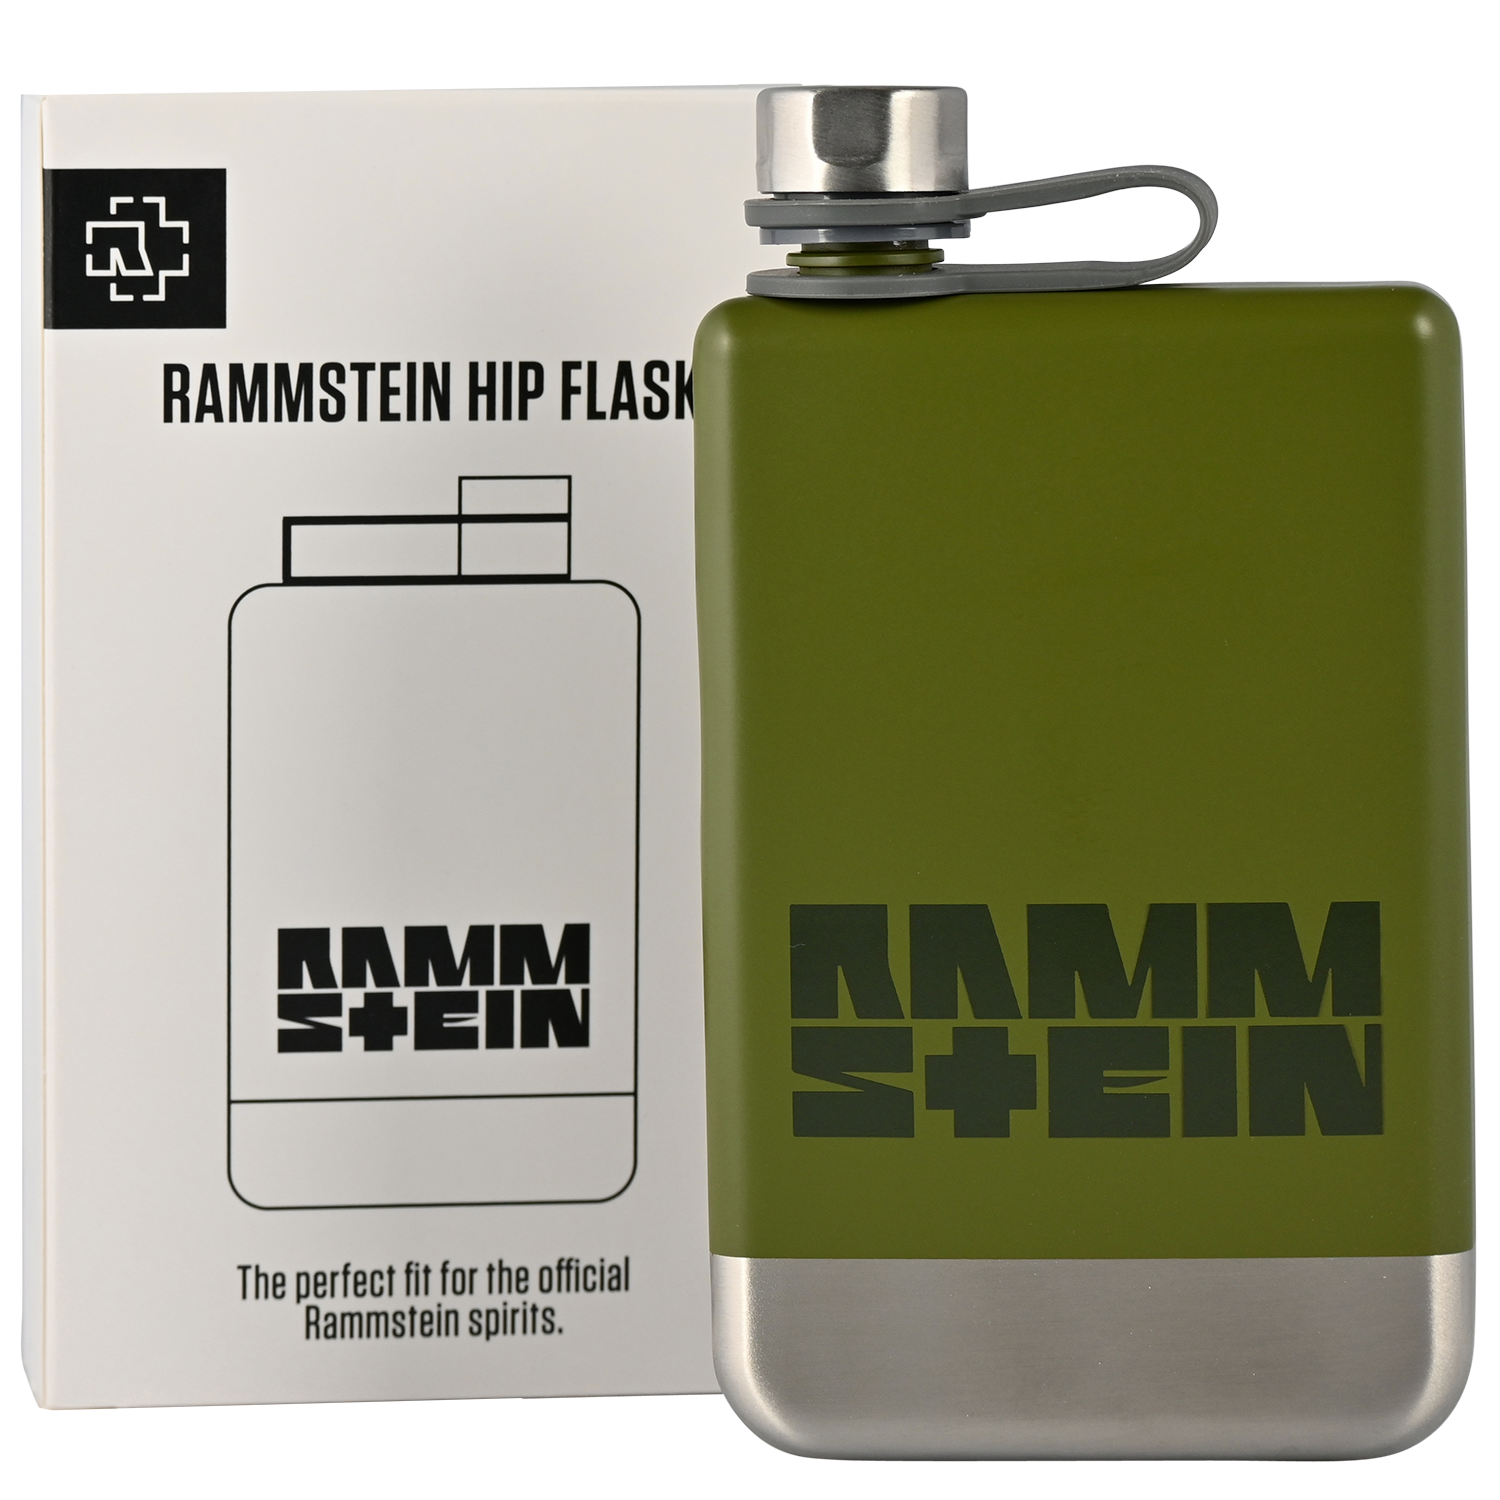 Rammstein hip flask 235 ml